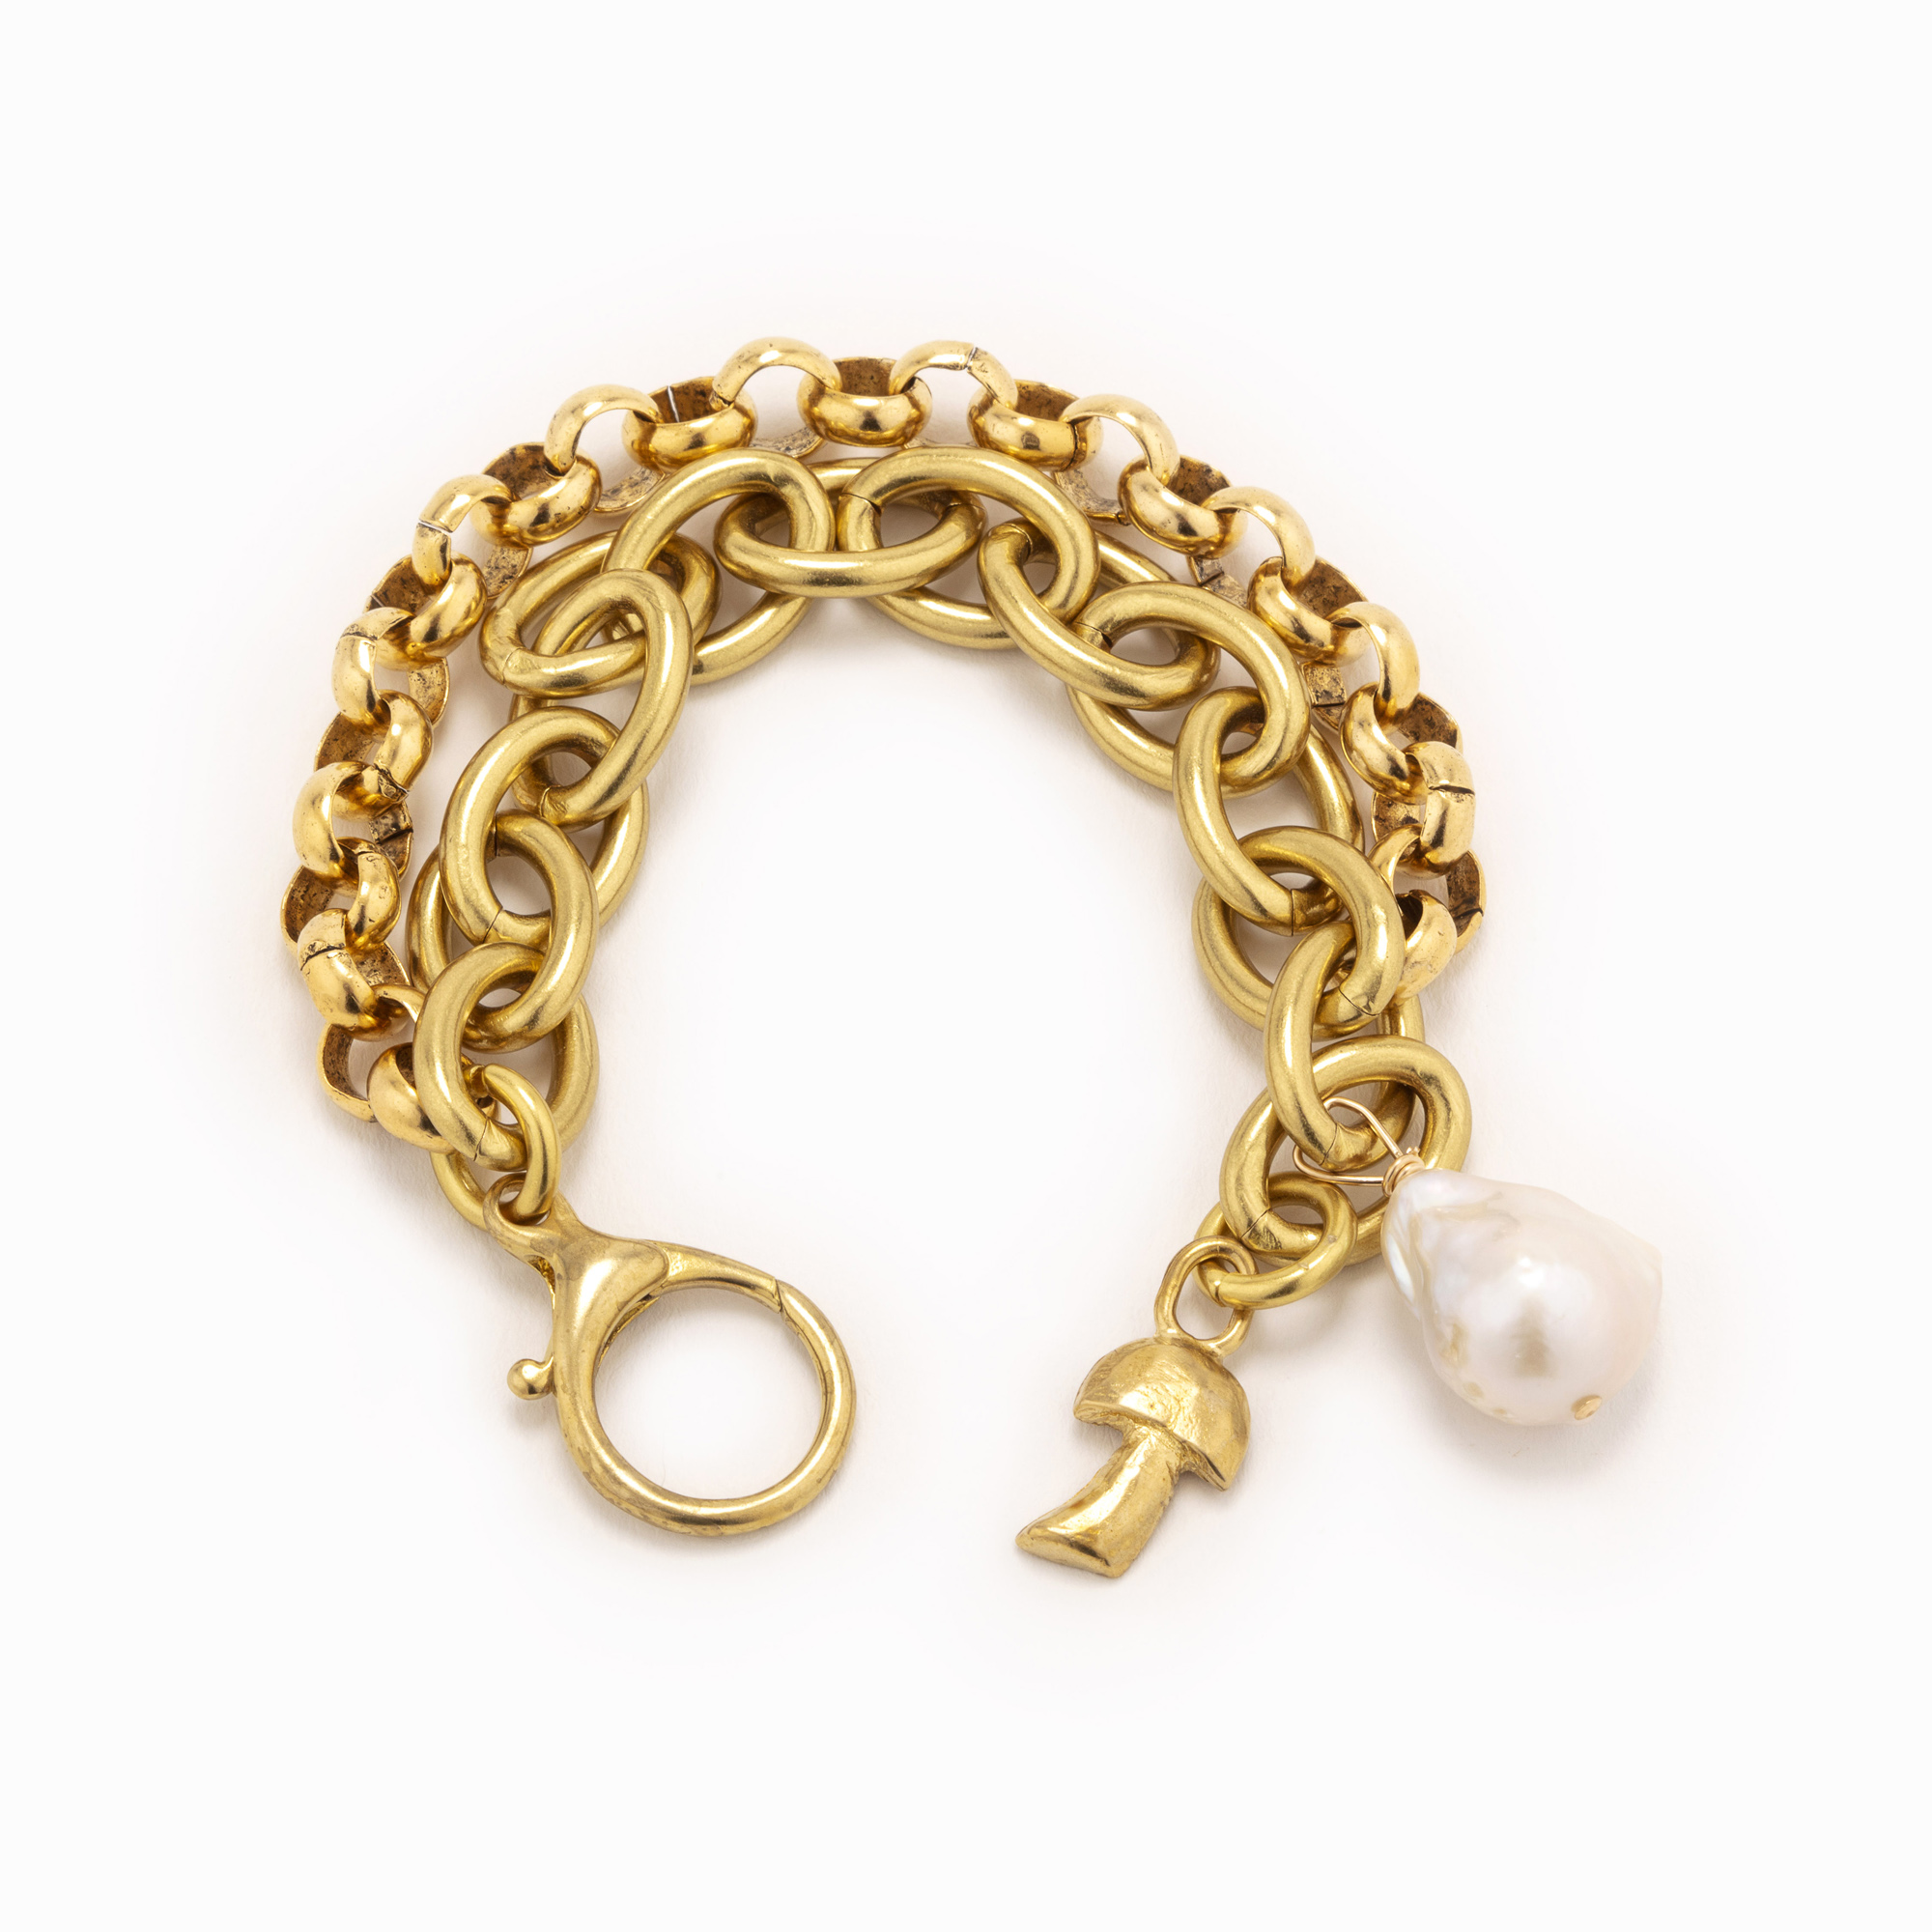 Featured image for “Mushroom Sea Brass Chain Bracelet”